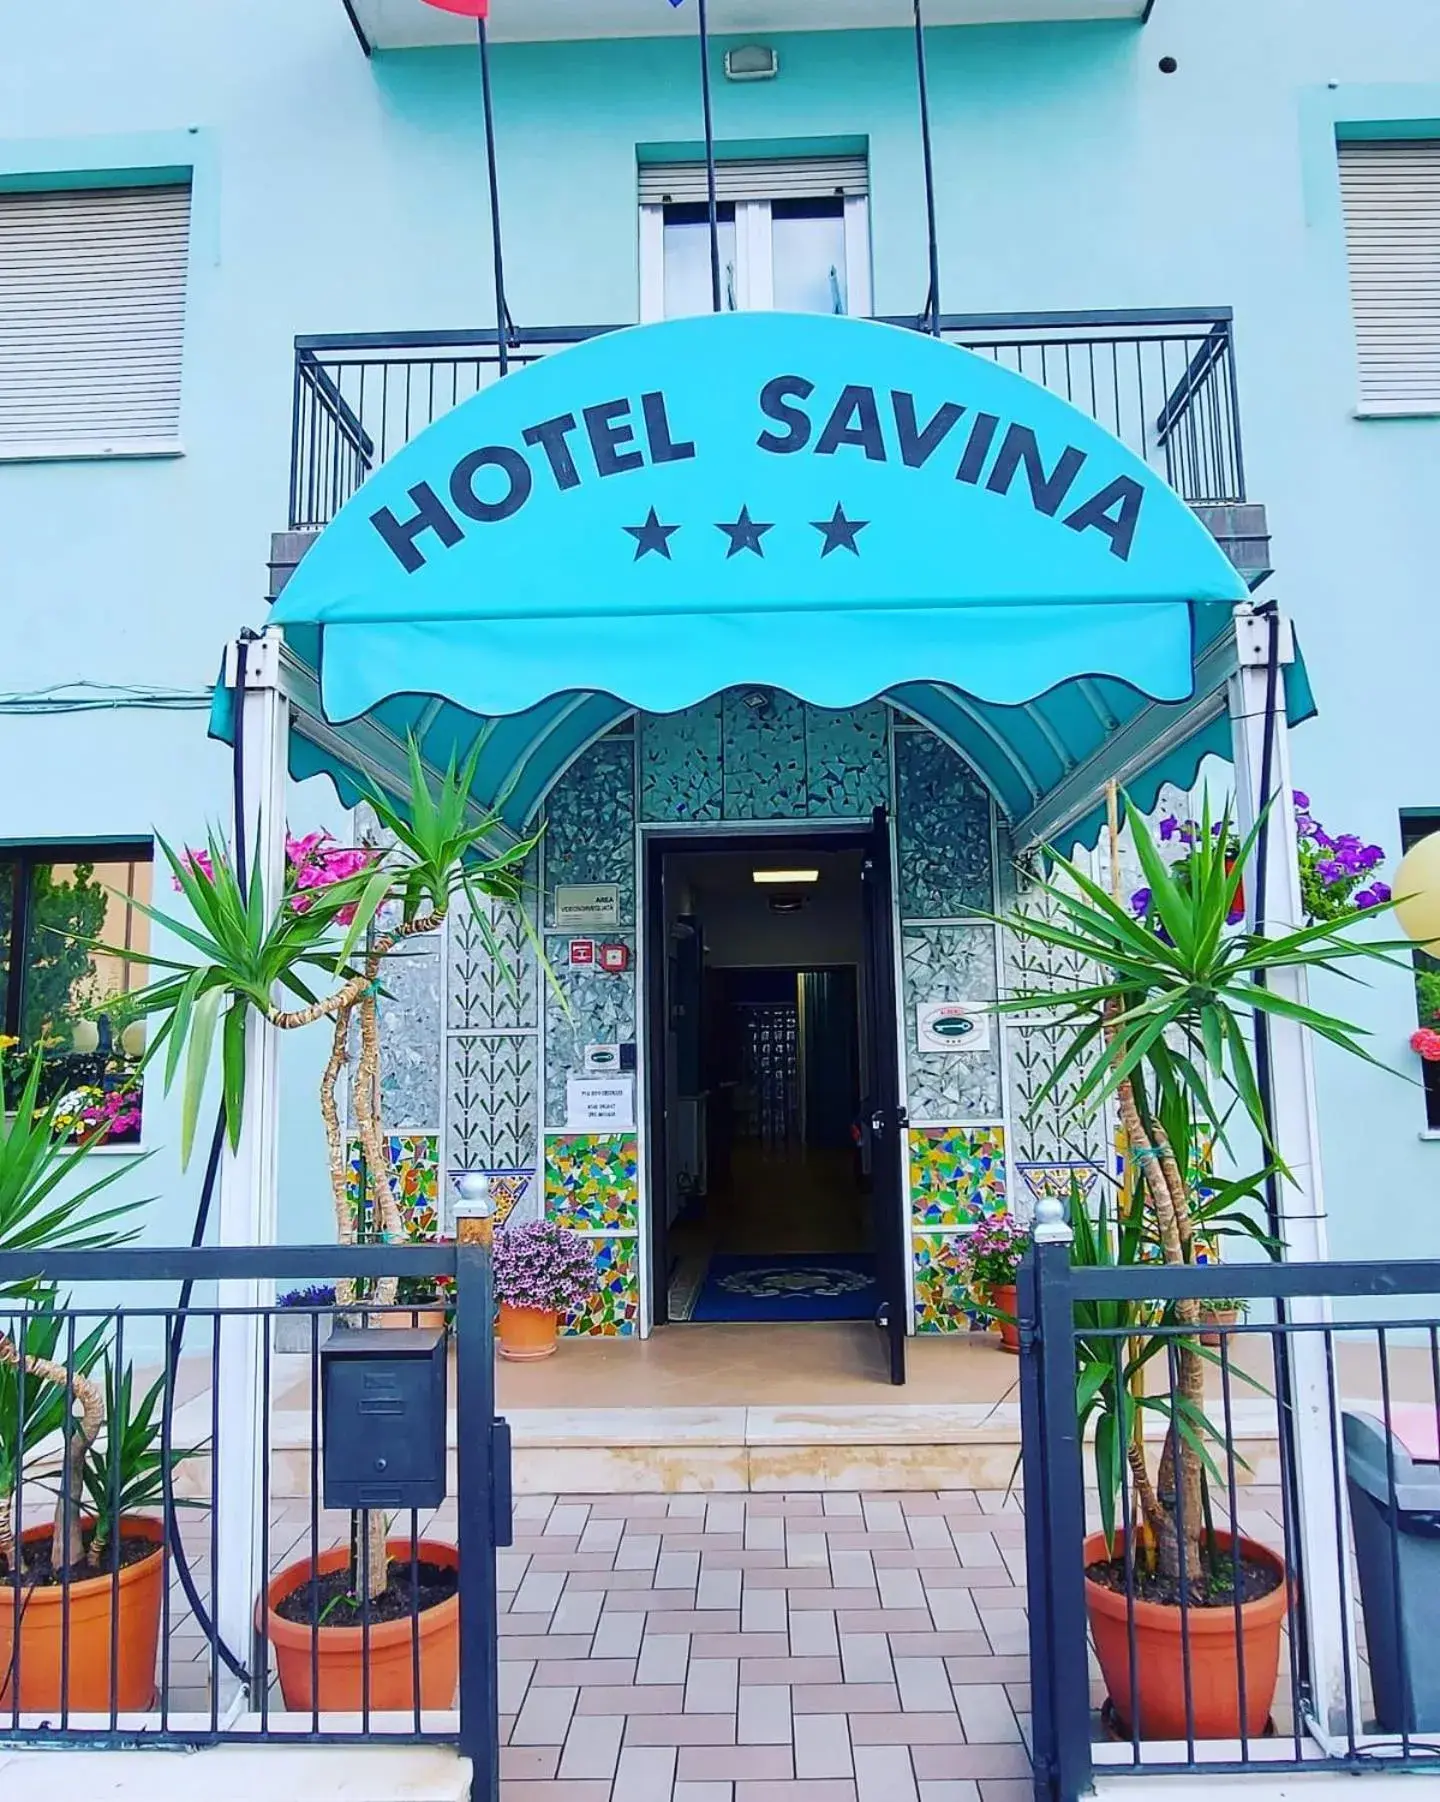 Property logo or sign in Hotel Savina